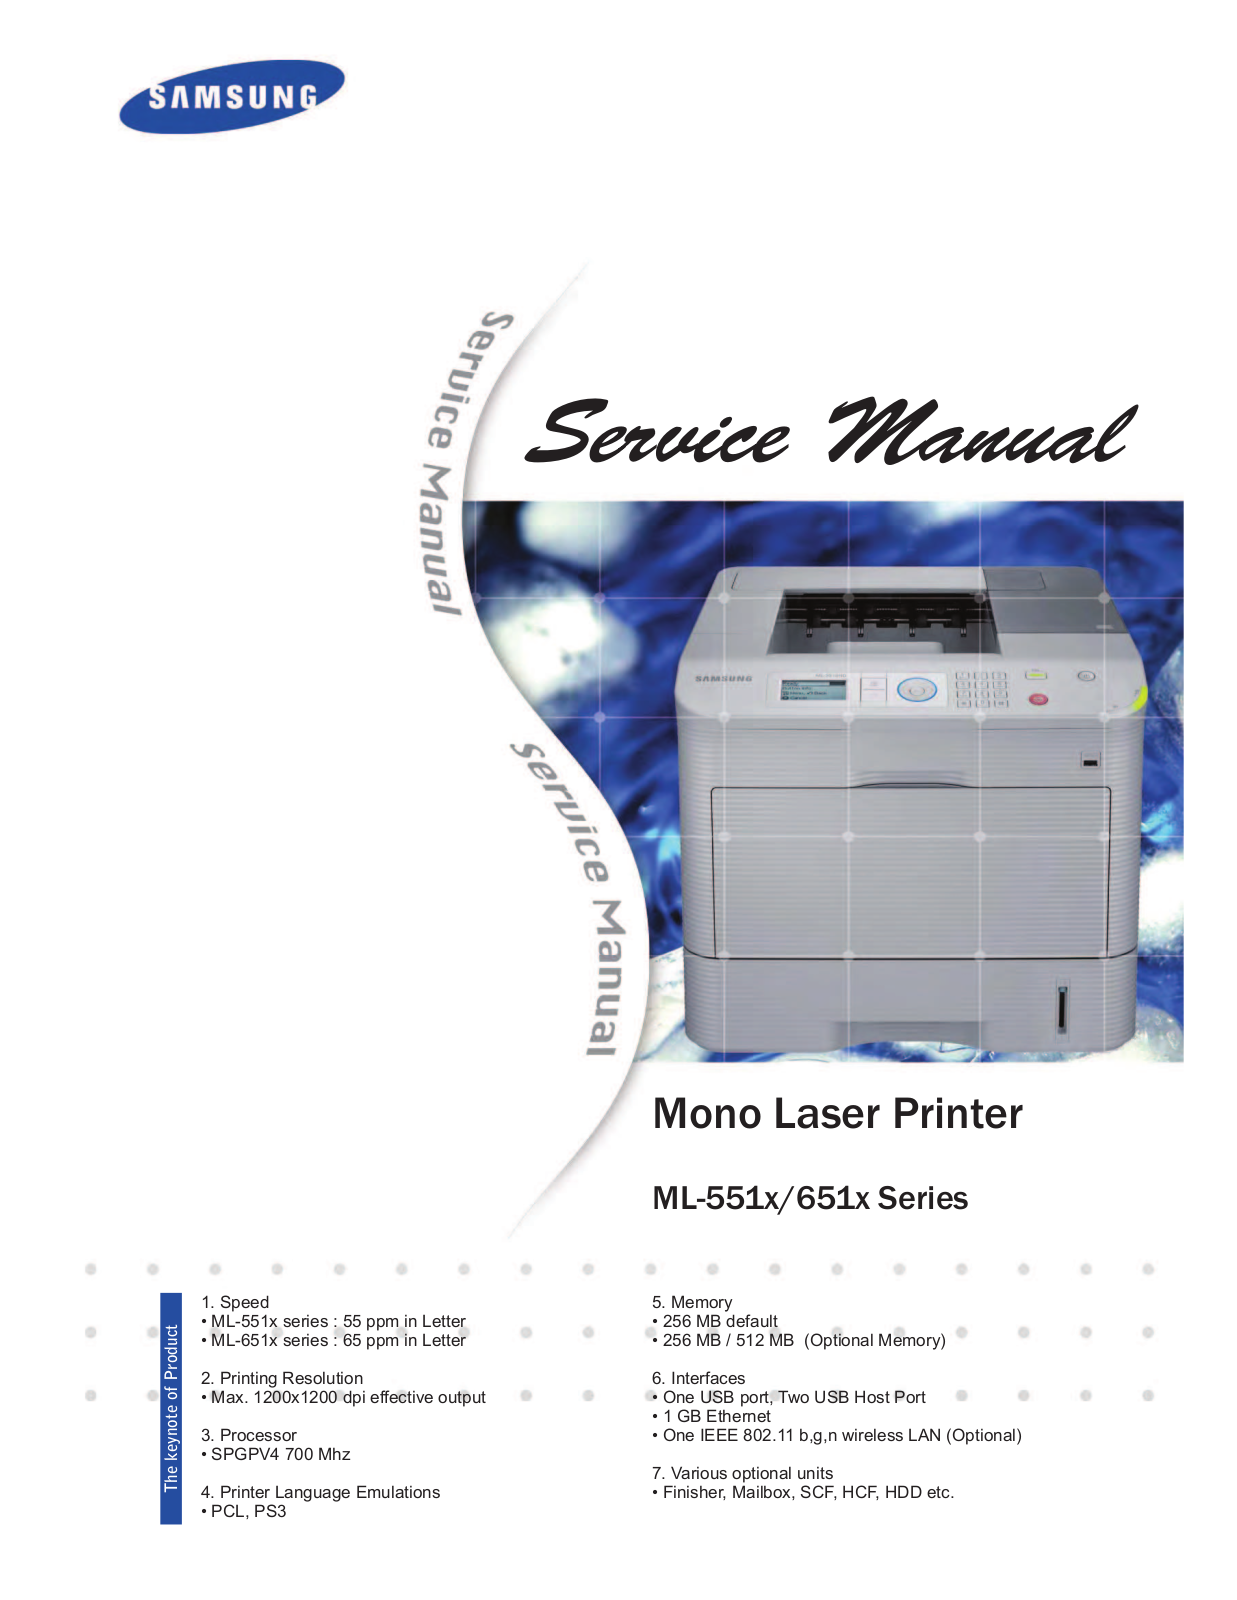 Samsung ML-5510, ML-6510, ML-5512, ML-6512 Service Manual and Parts Catalog